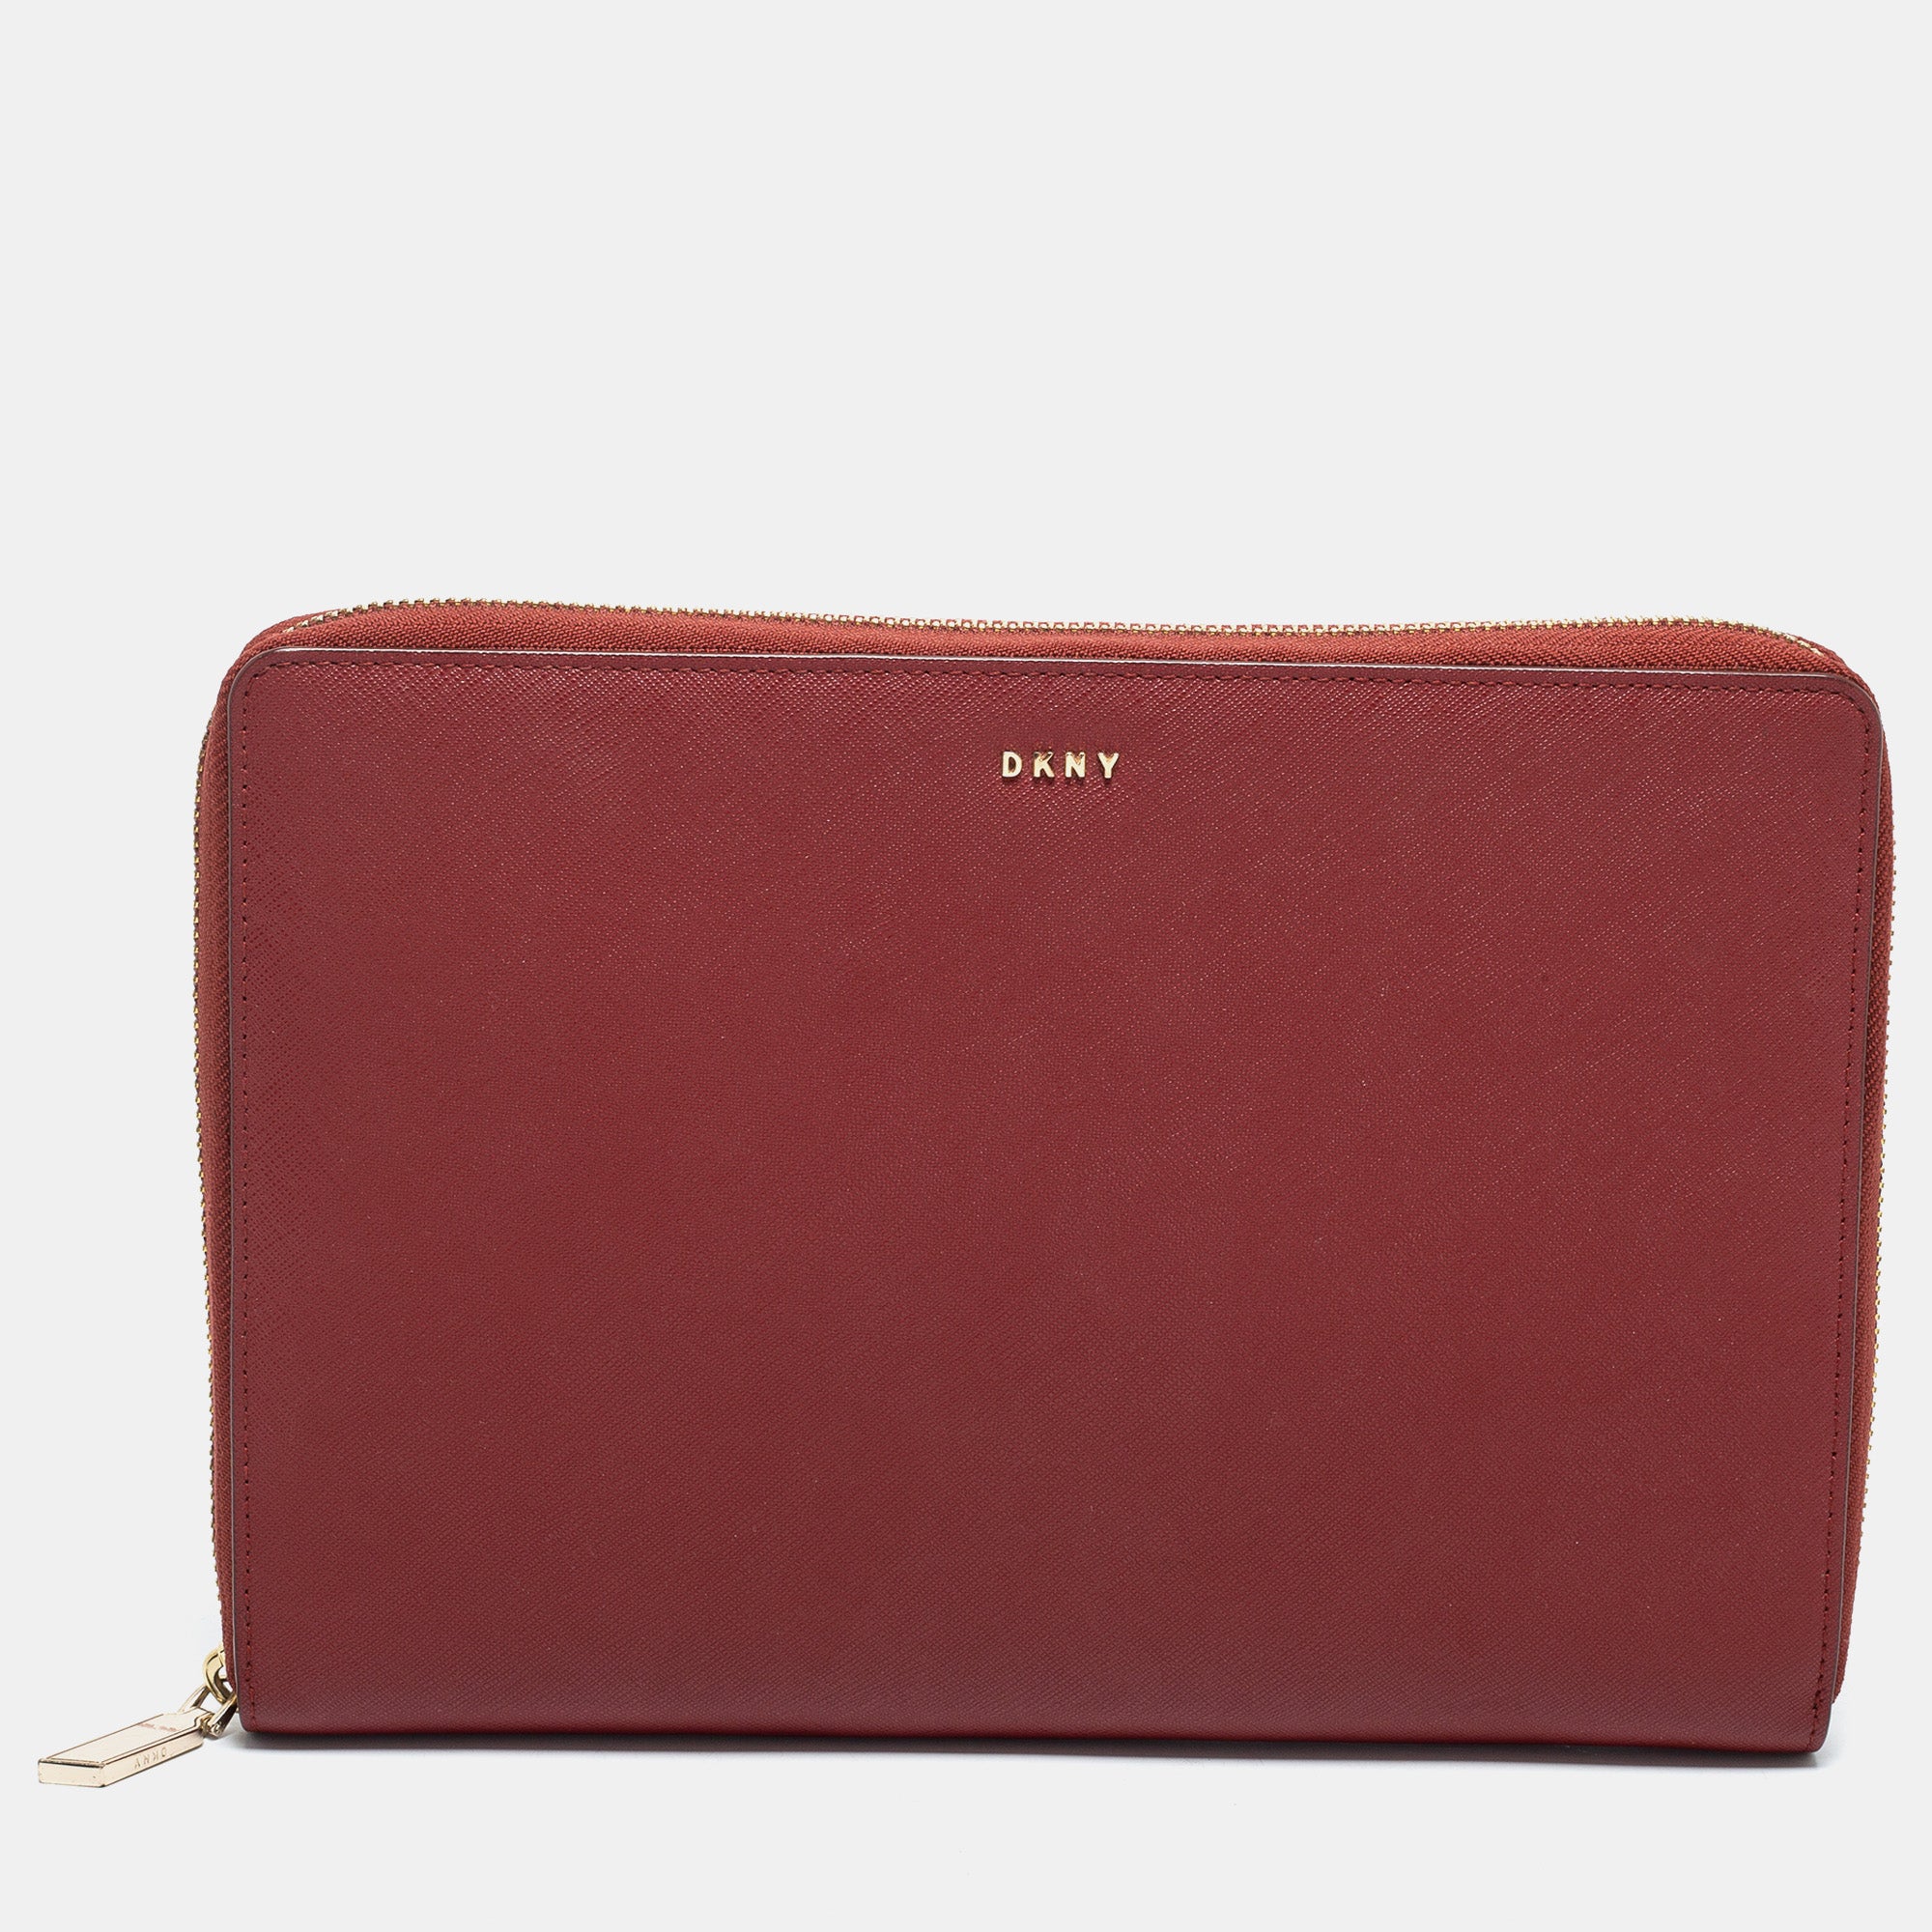 DKNY Red Croc Embossed Leather Shoulder Bag Purse EUC Luxe ELEGANT Clutch w  Gold | eBay